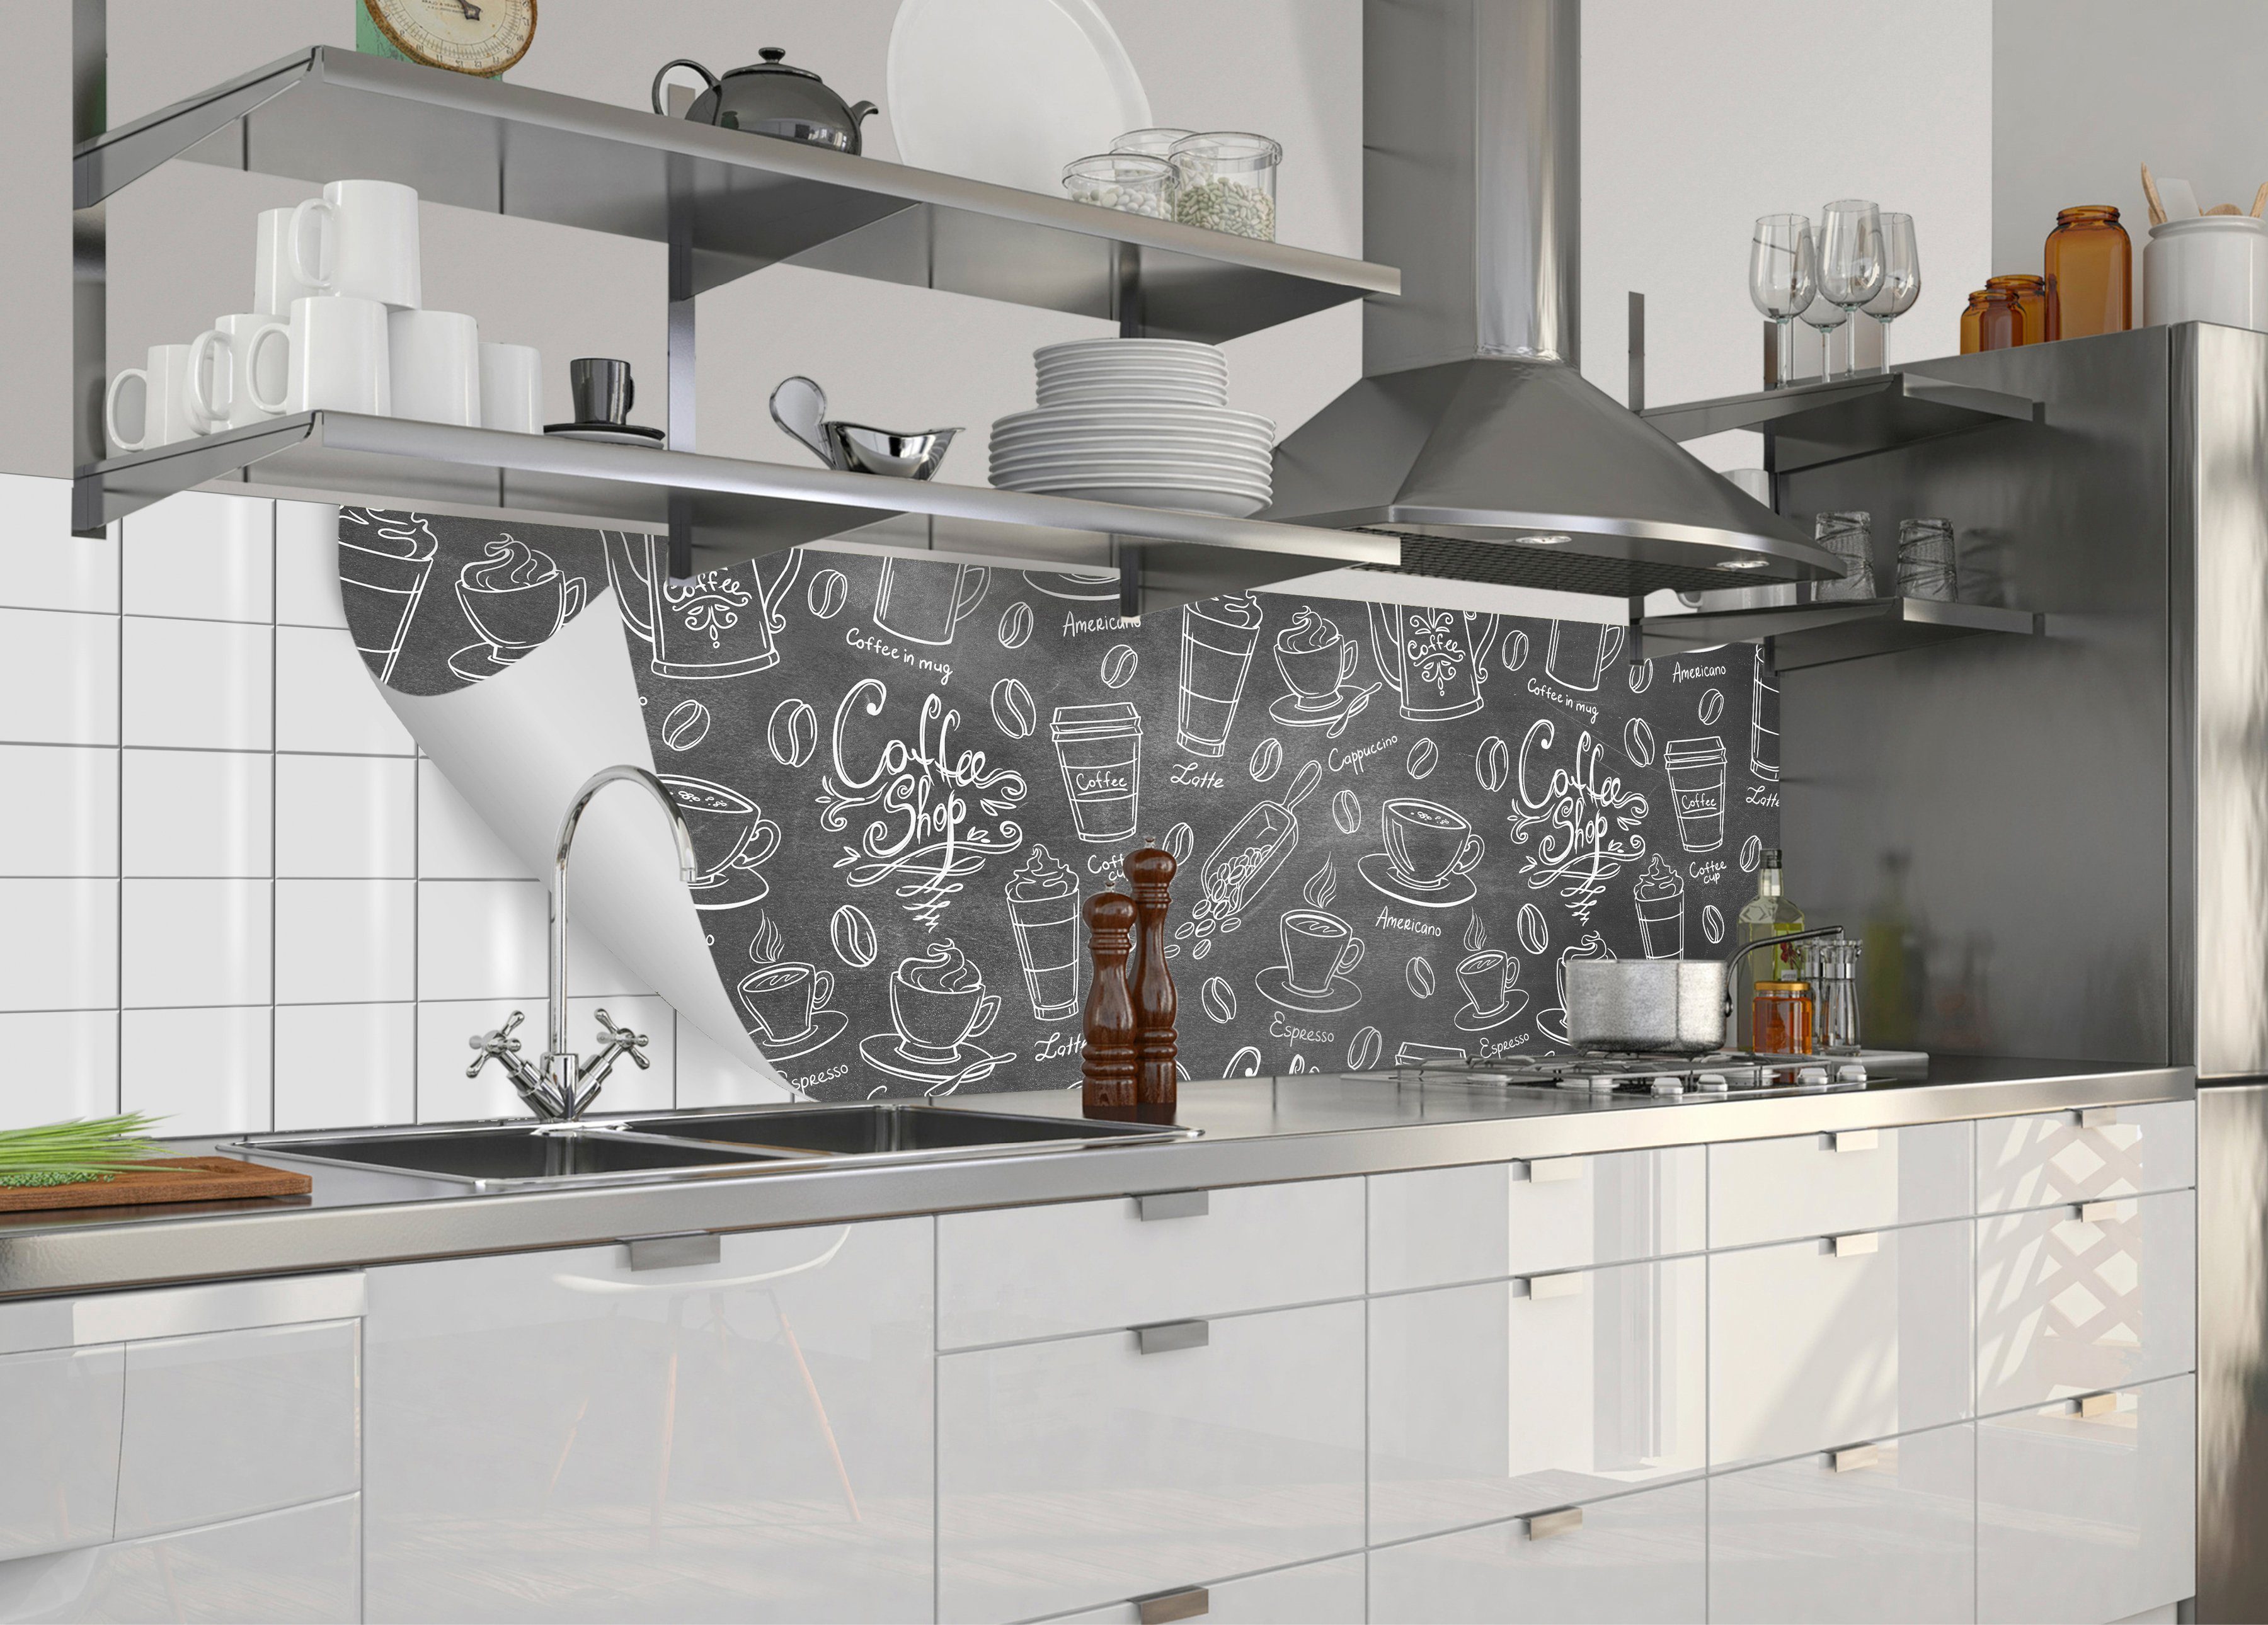 Coffee Küchenrückwand-Folie Küchenrückwand fixy MySpotti Pattern, selbstklebende schwarz und flexible